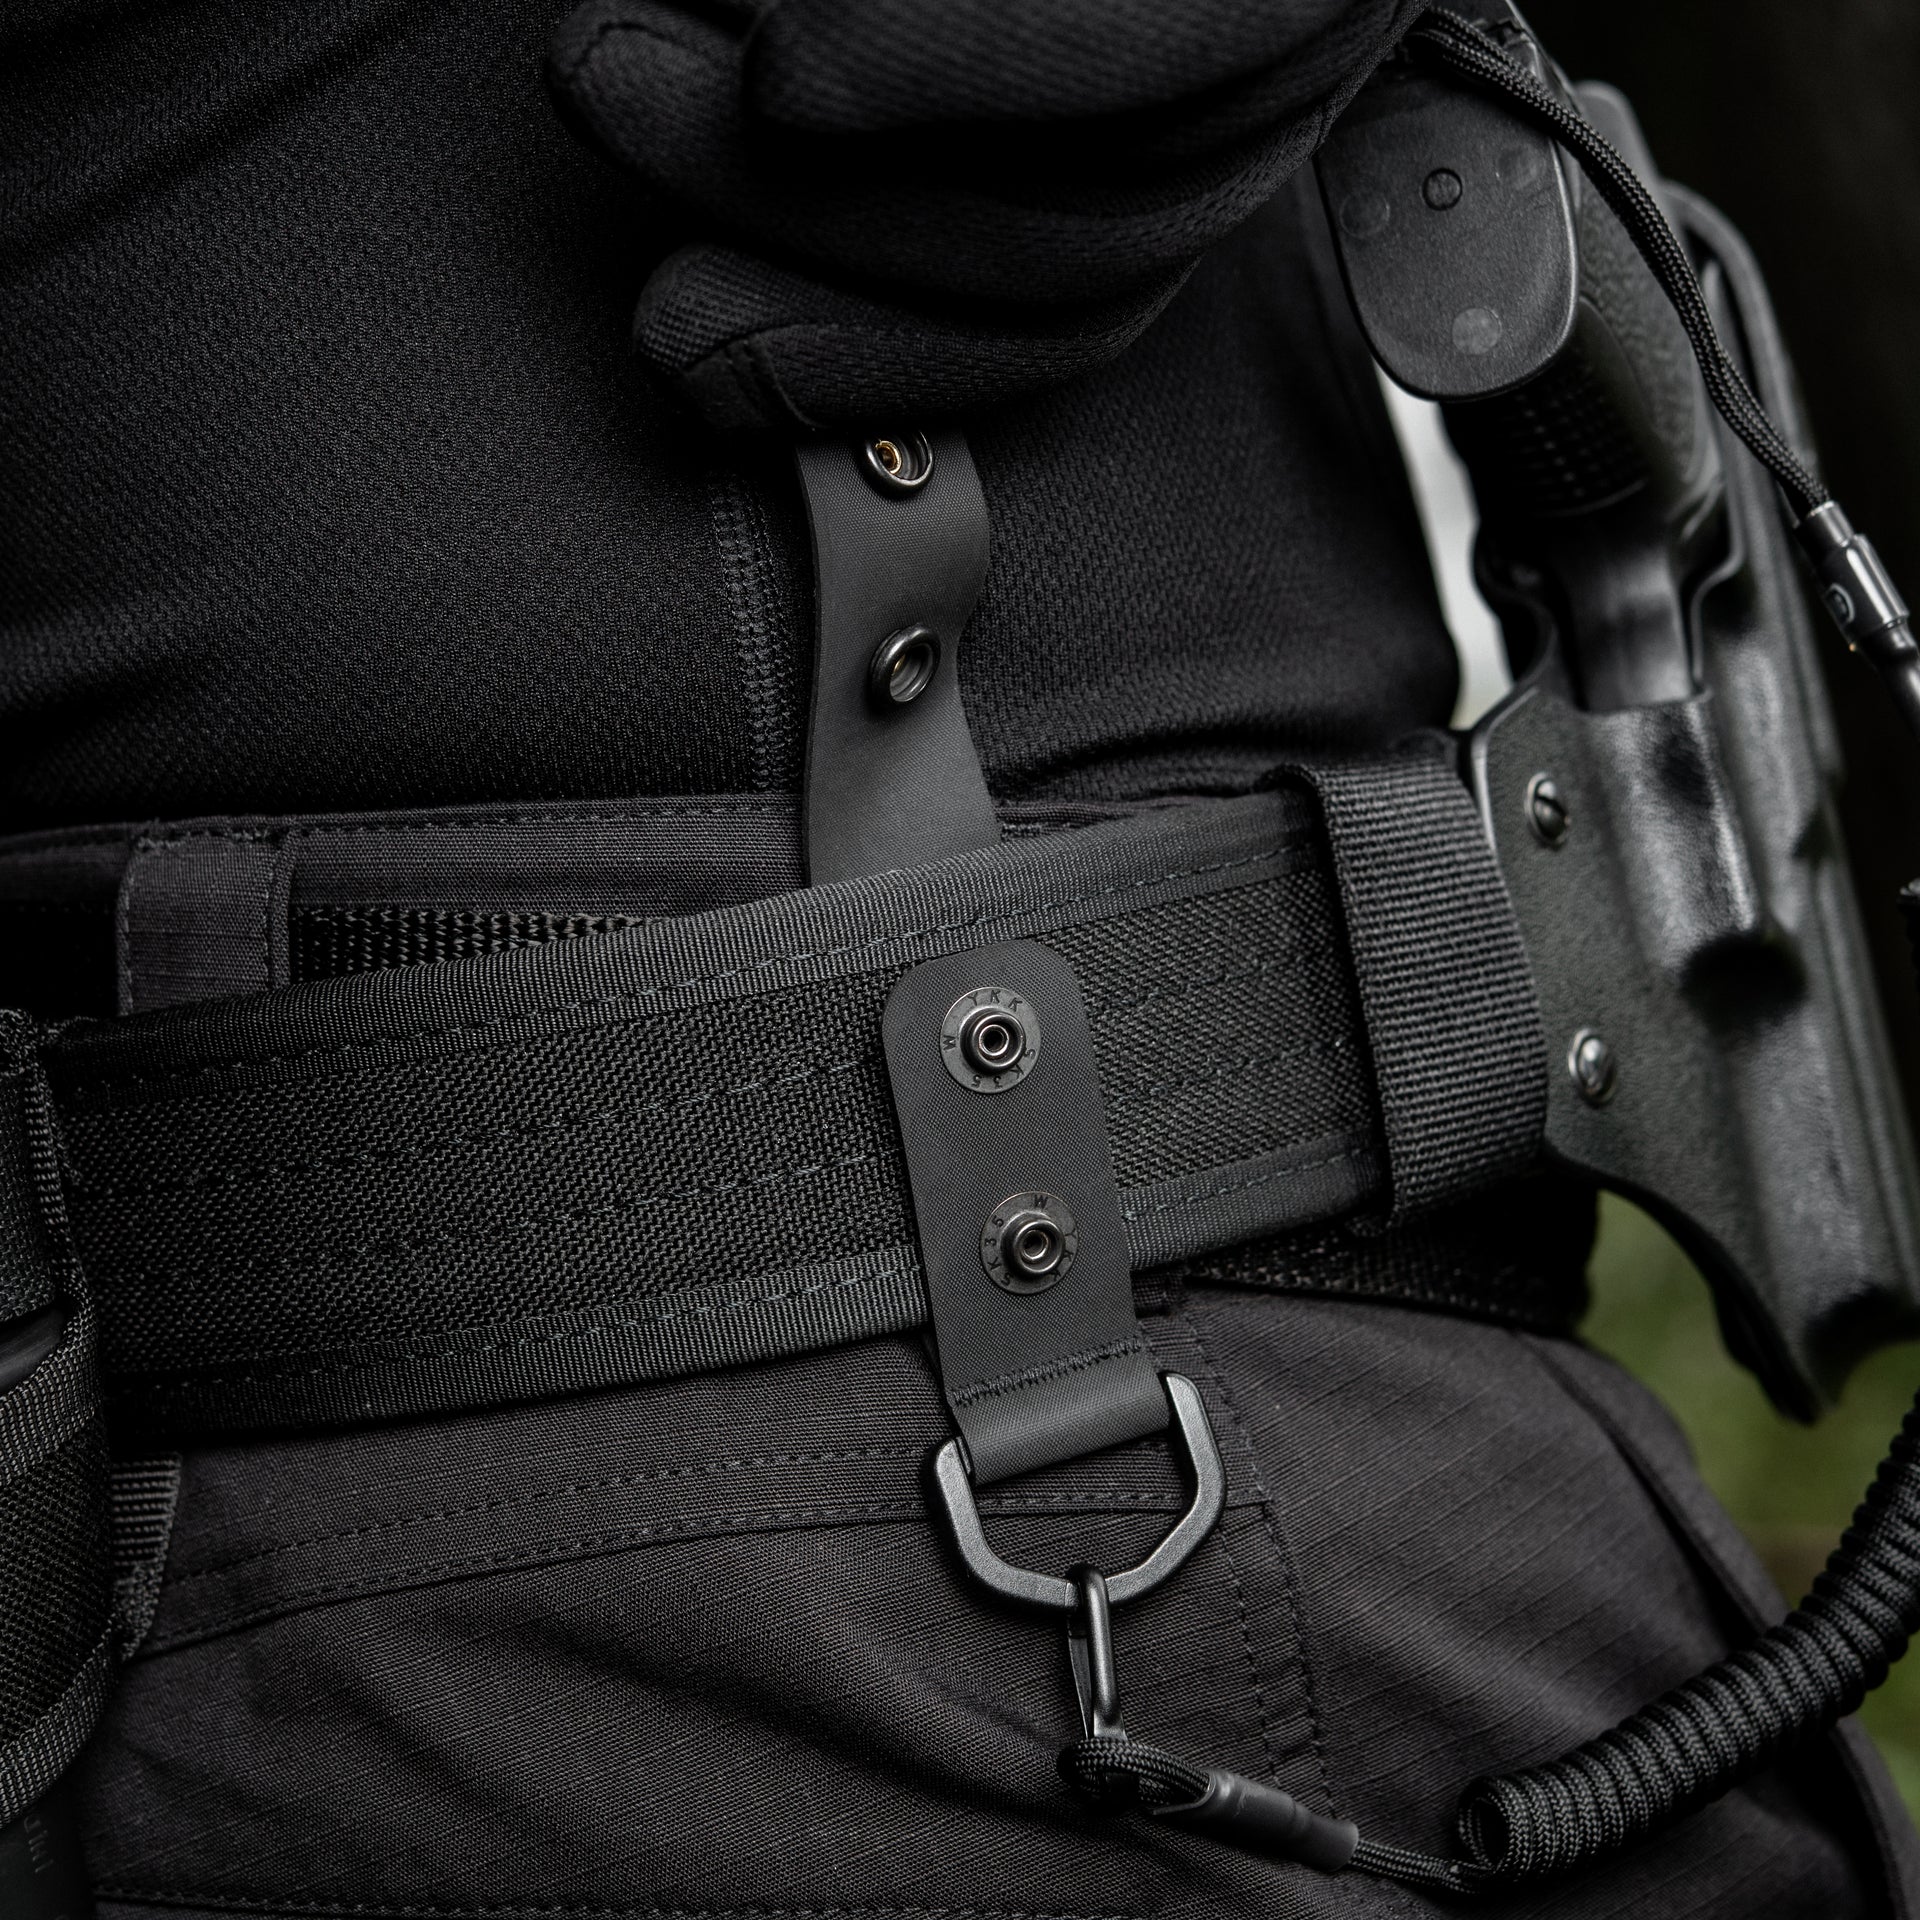 M-Tac Police Duty Belt Keepers Hypalon for 2 inch wide (Set of 5) – M-TAC